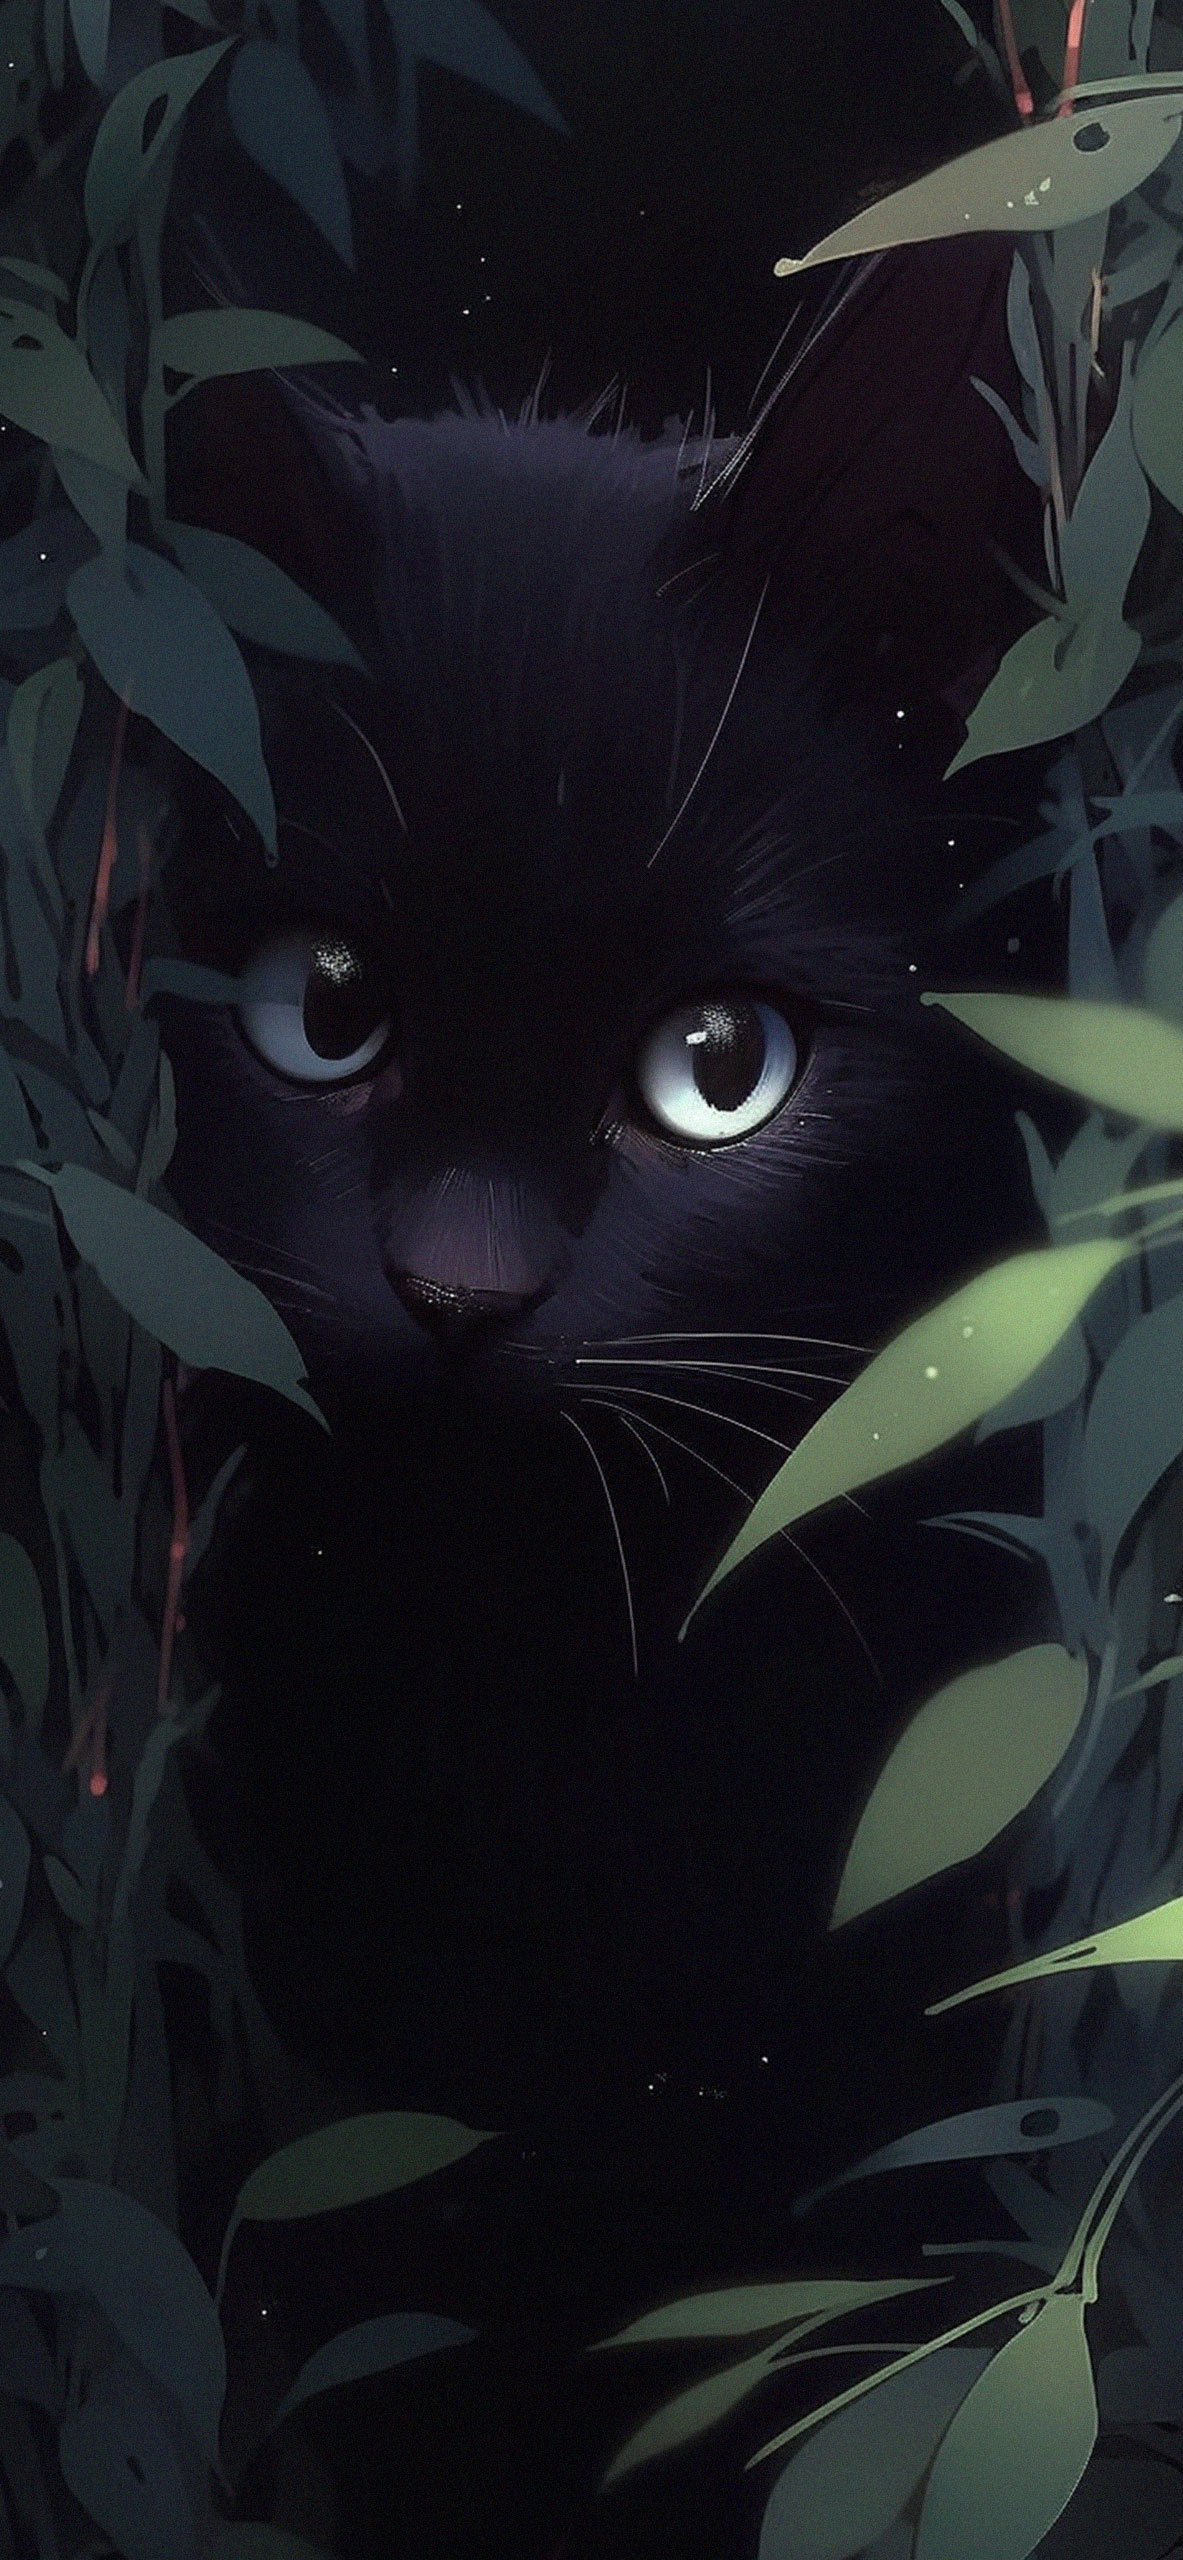 Cute black cat in the grass aesthetic wallpaper Black cat art